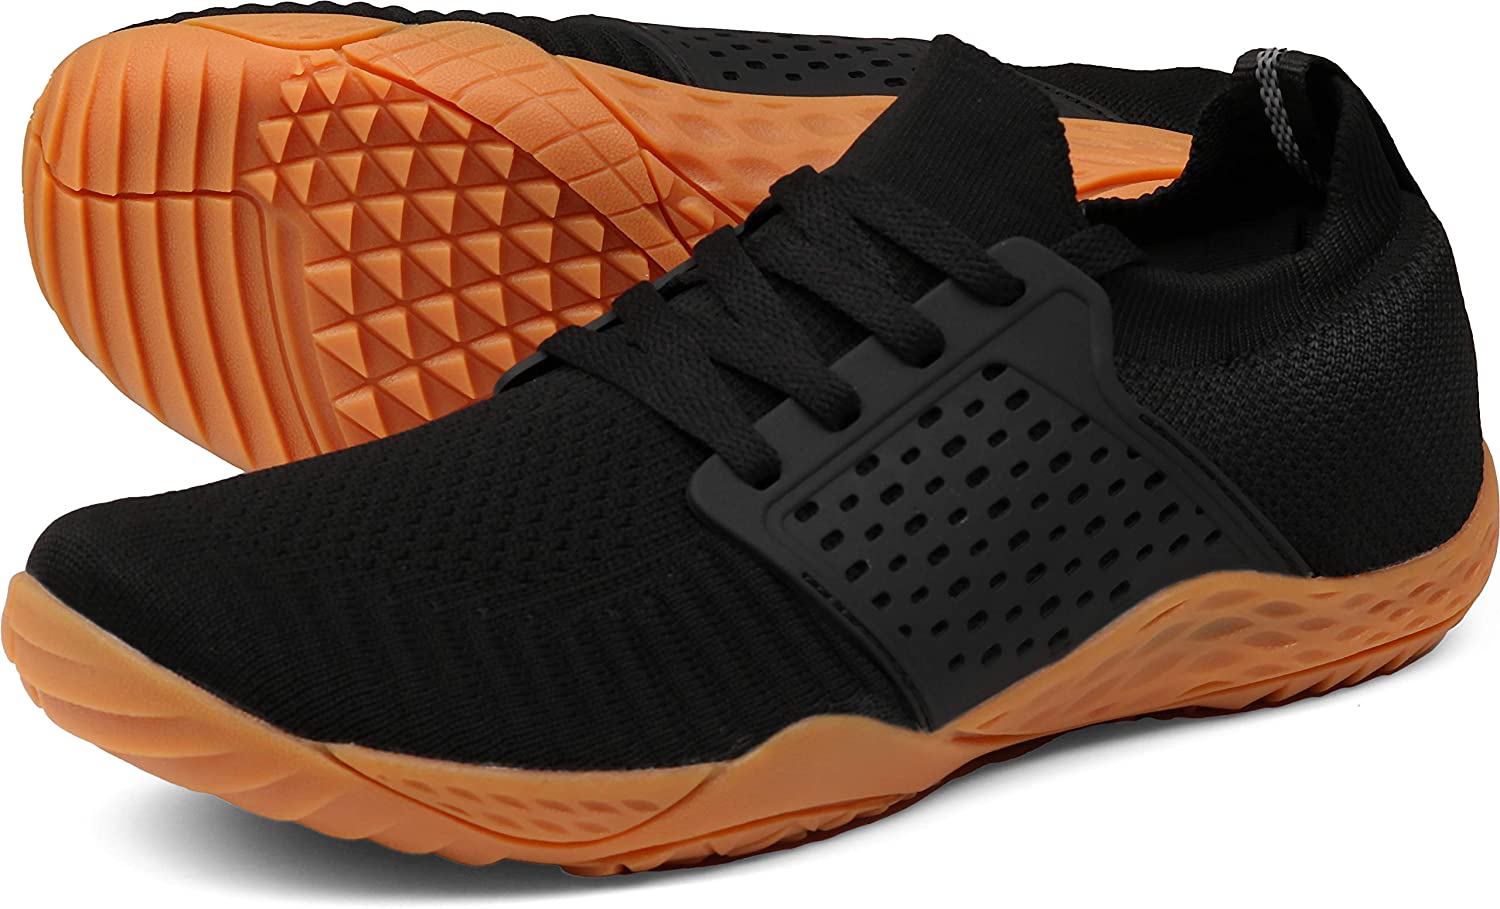 Men's Minimalist Trail Runner Wide Toe Box Zero Drop Sole Minimalist Barefoot Shoe 